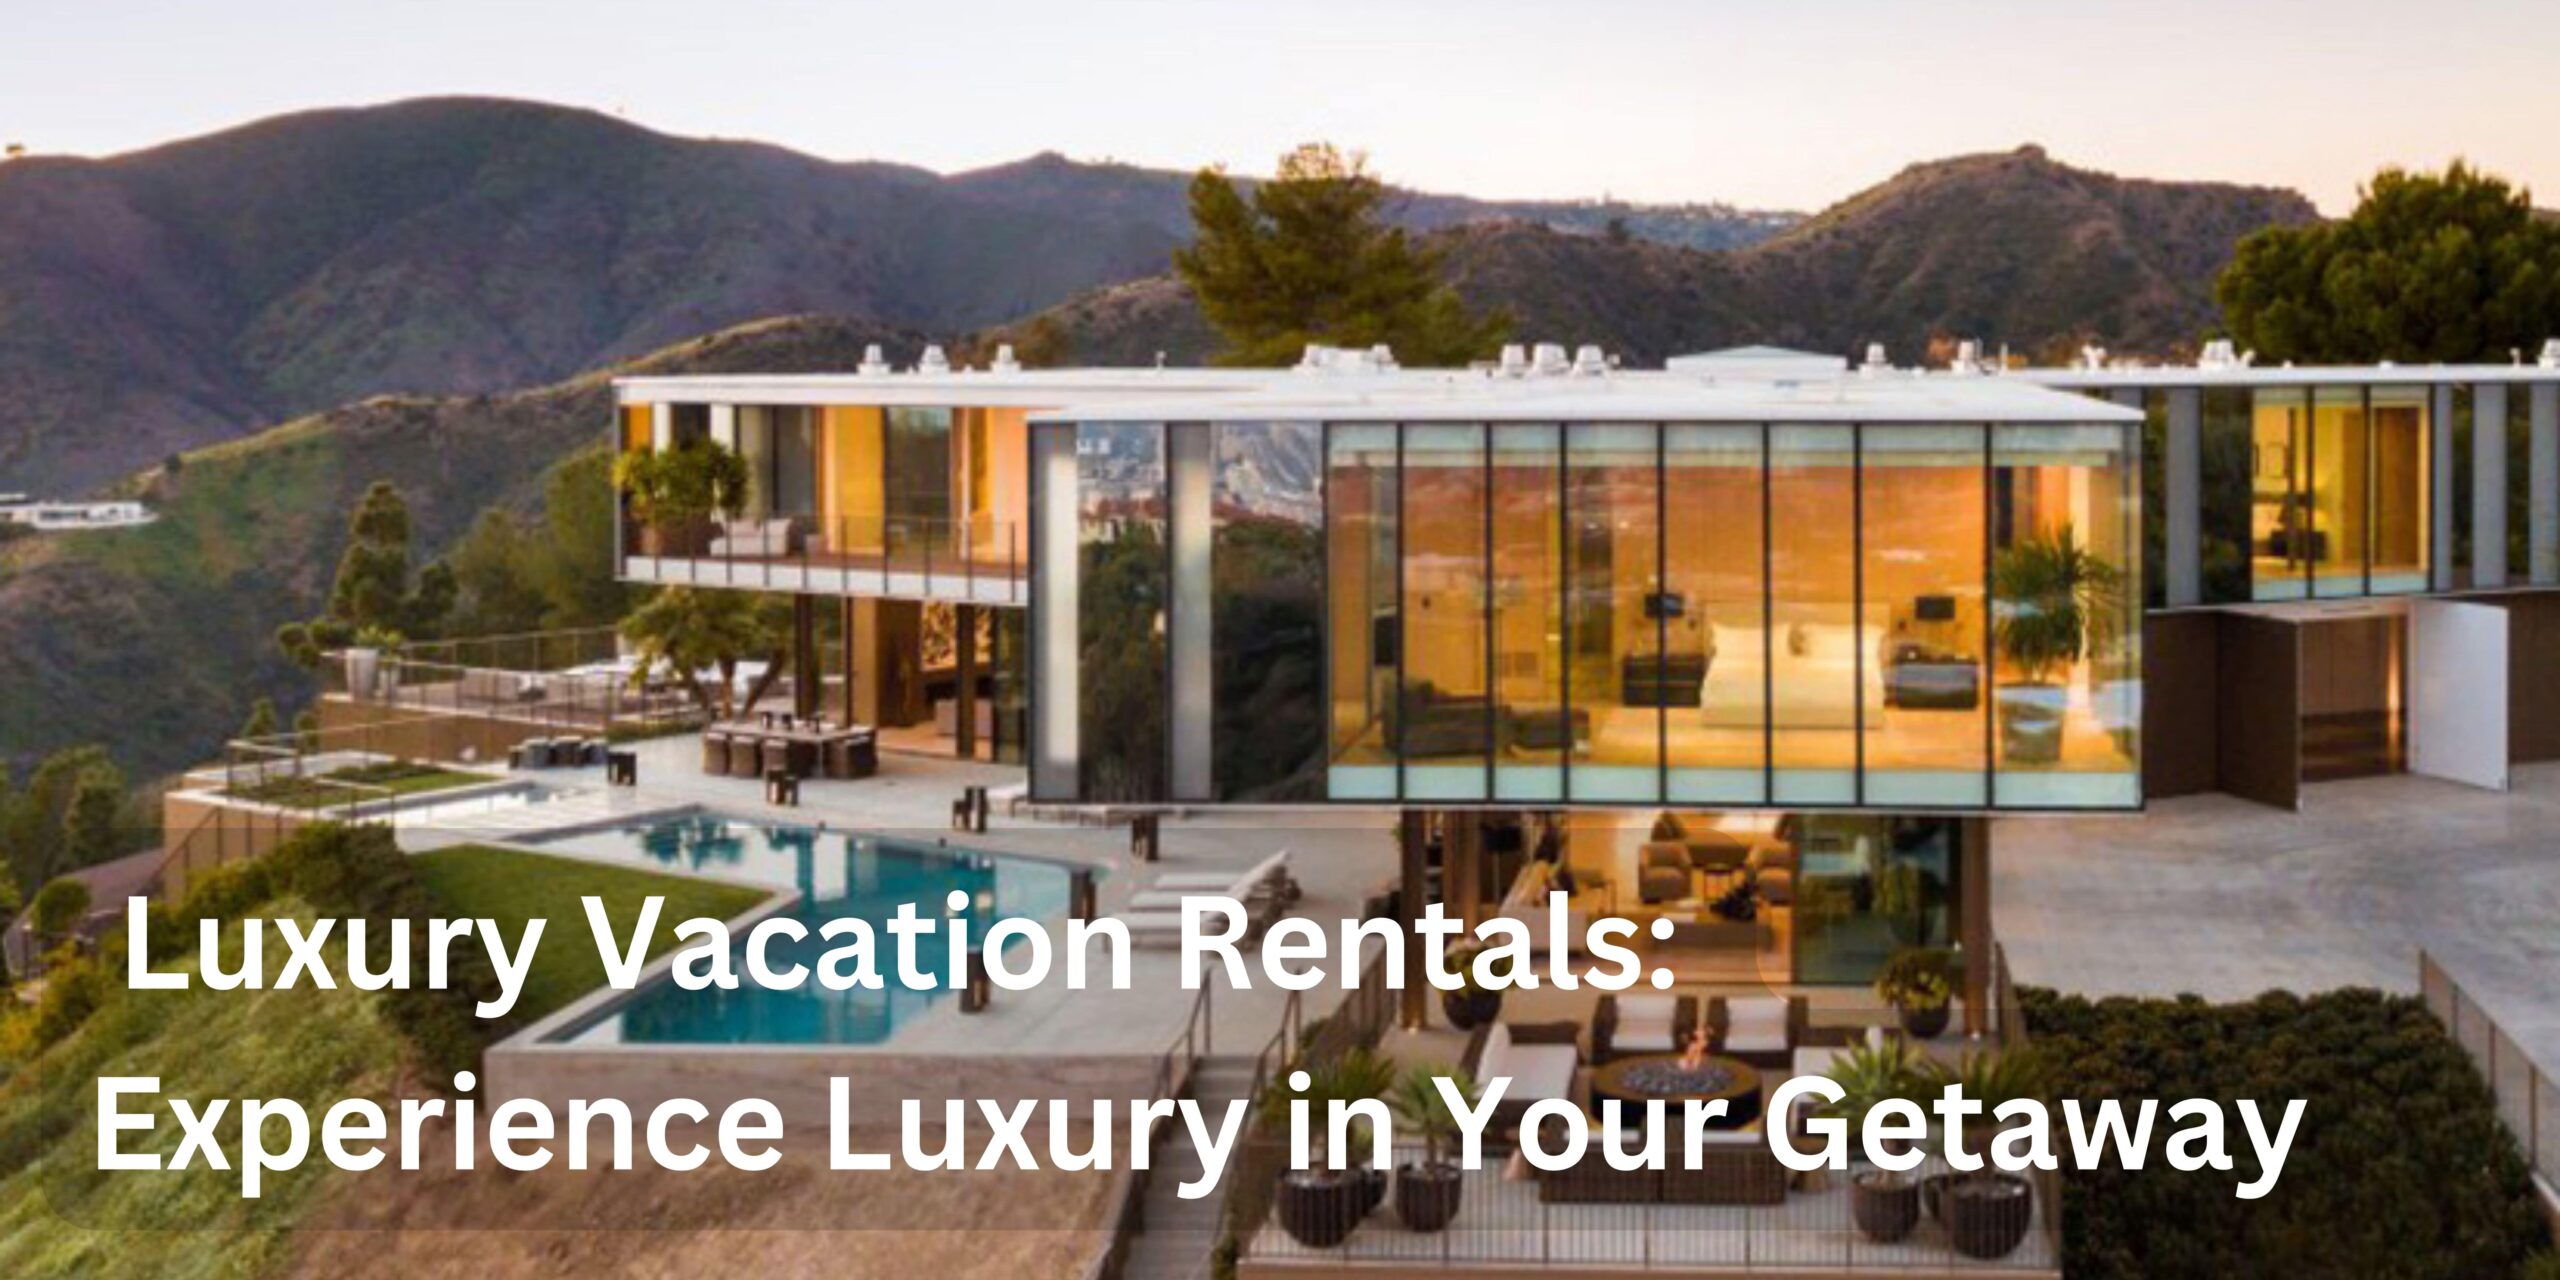 Luxury Vacation Rentals: Experience Luxury in Your Getaway